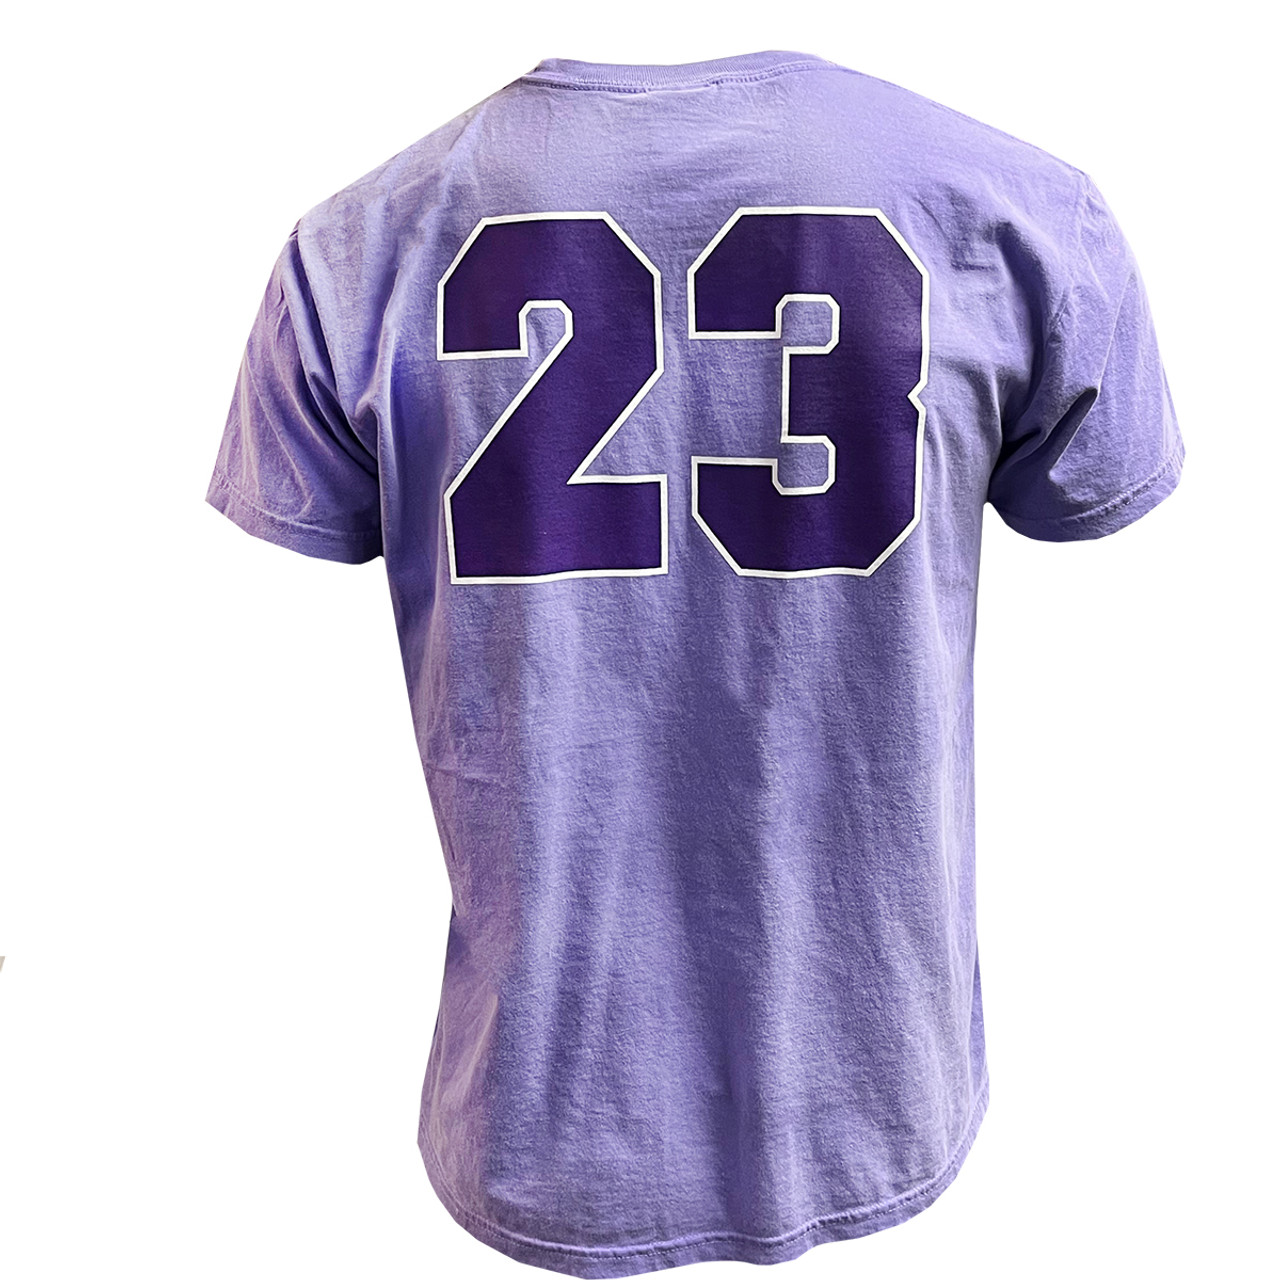 Men's Champion Purple ECU Pirates Football Jersey Long Sleeve T-Shirt